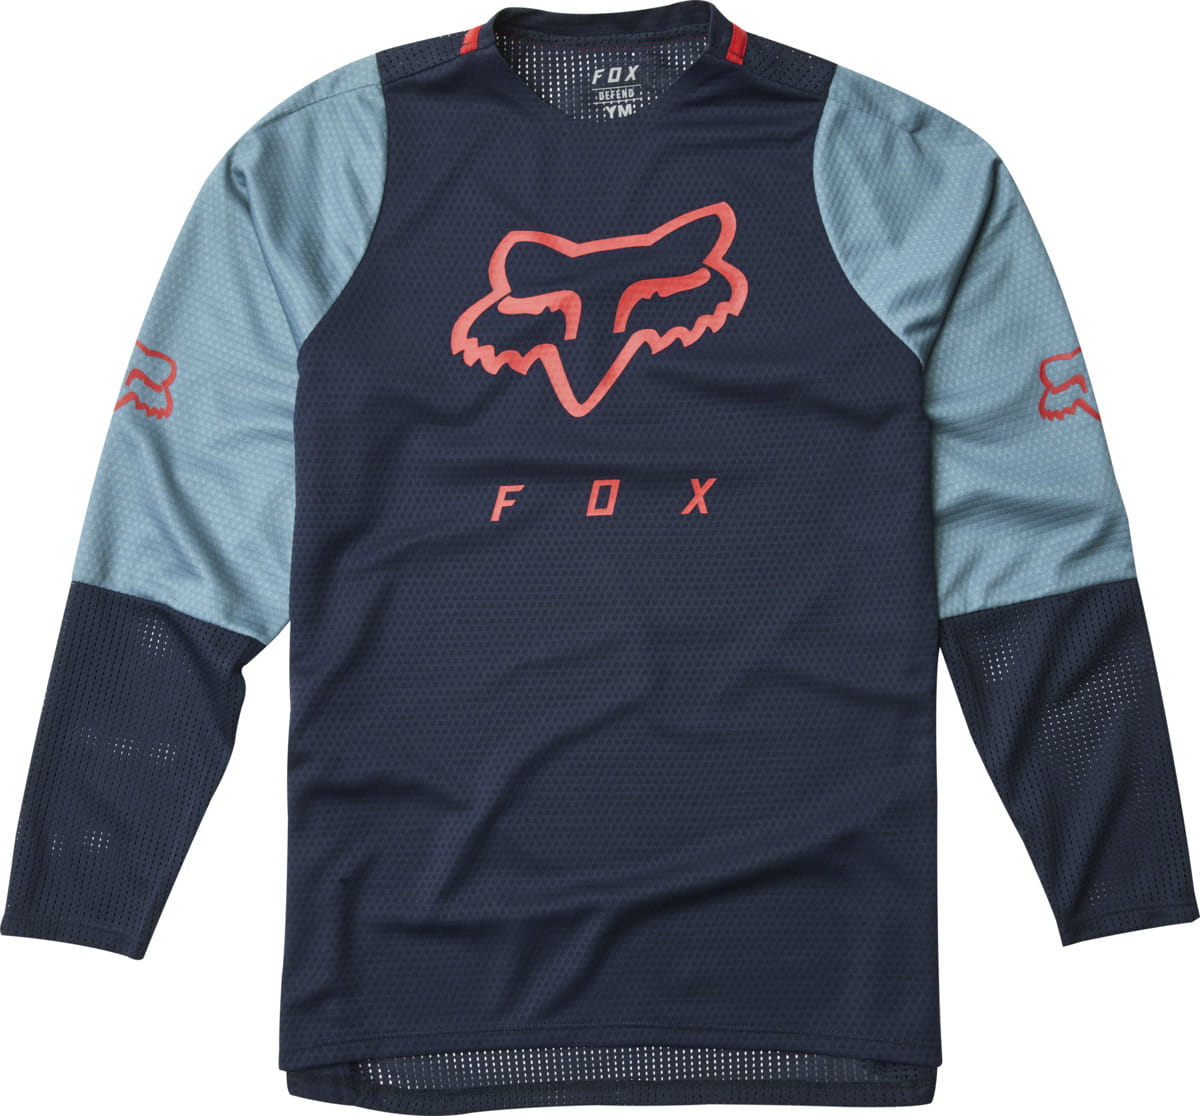 kids fox jersey